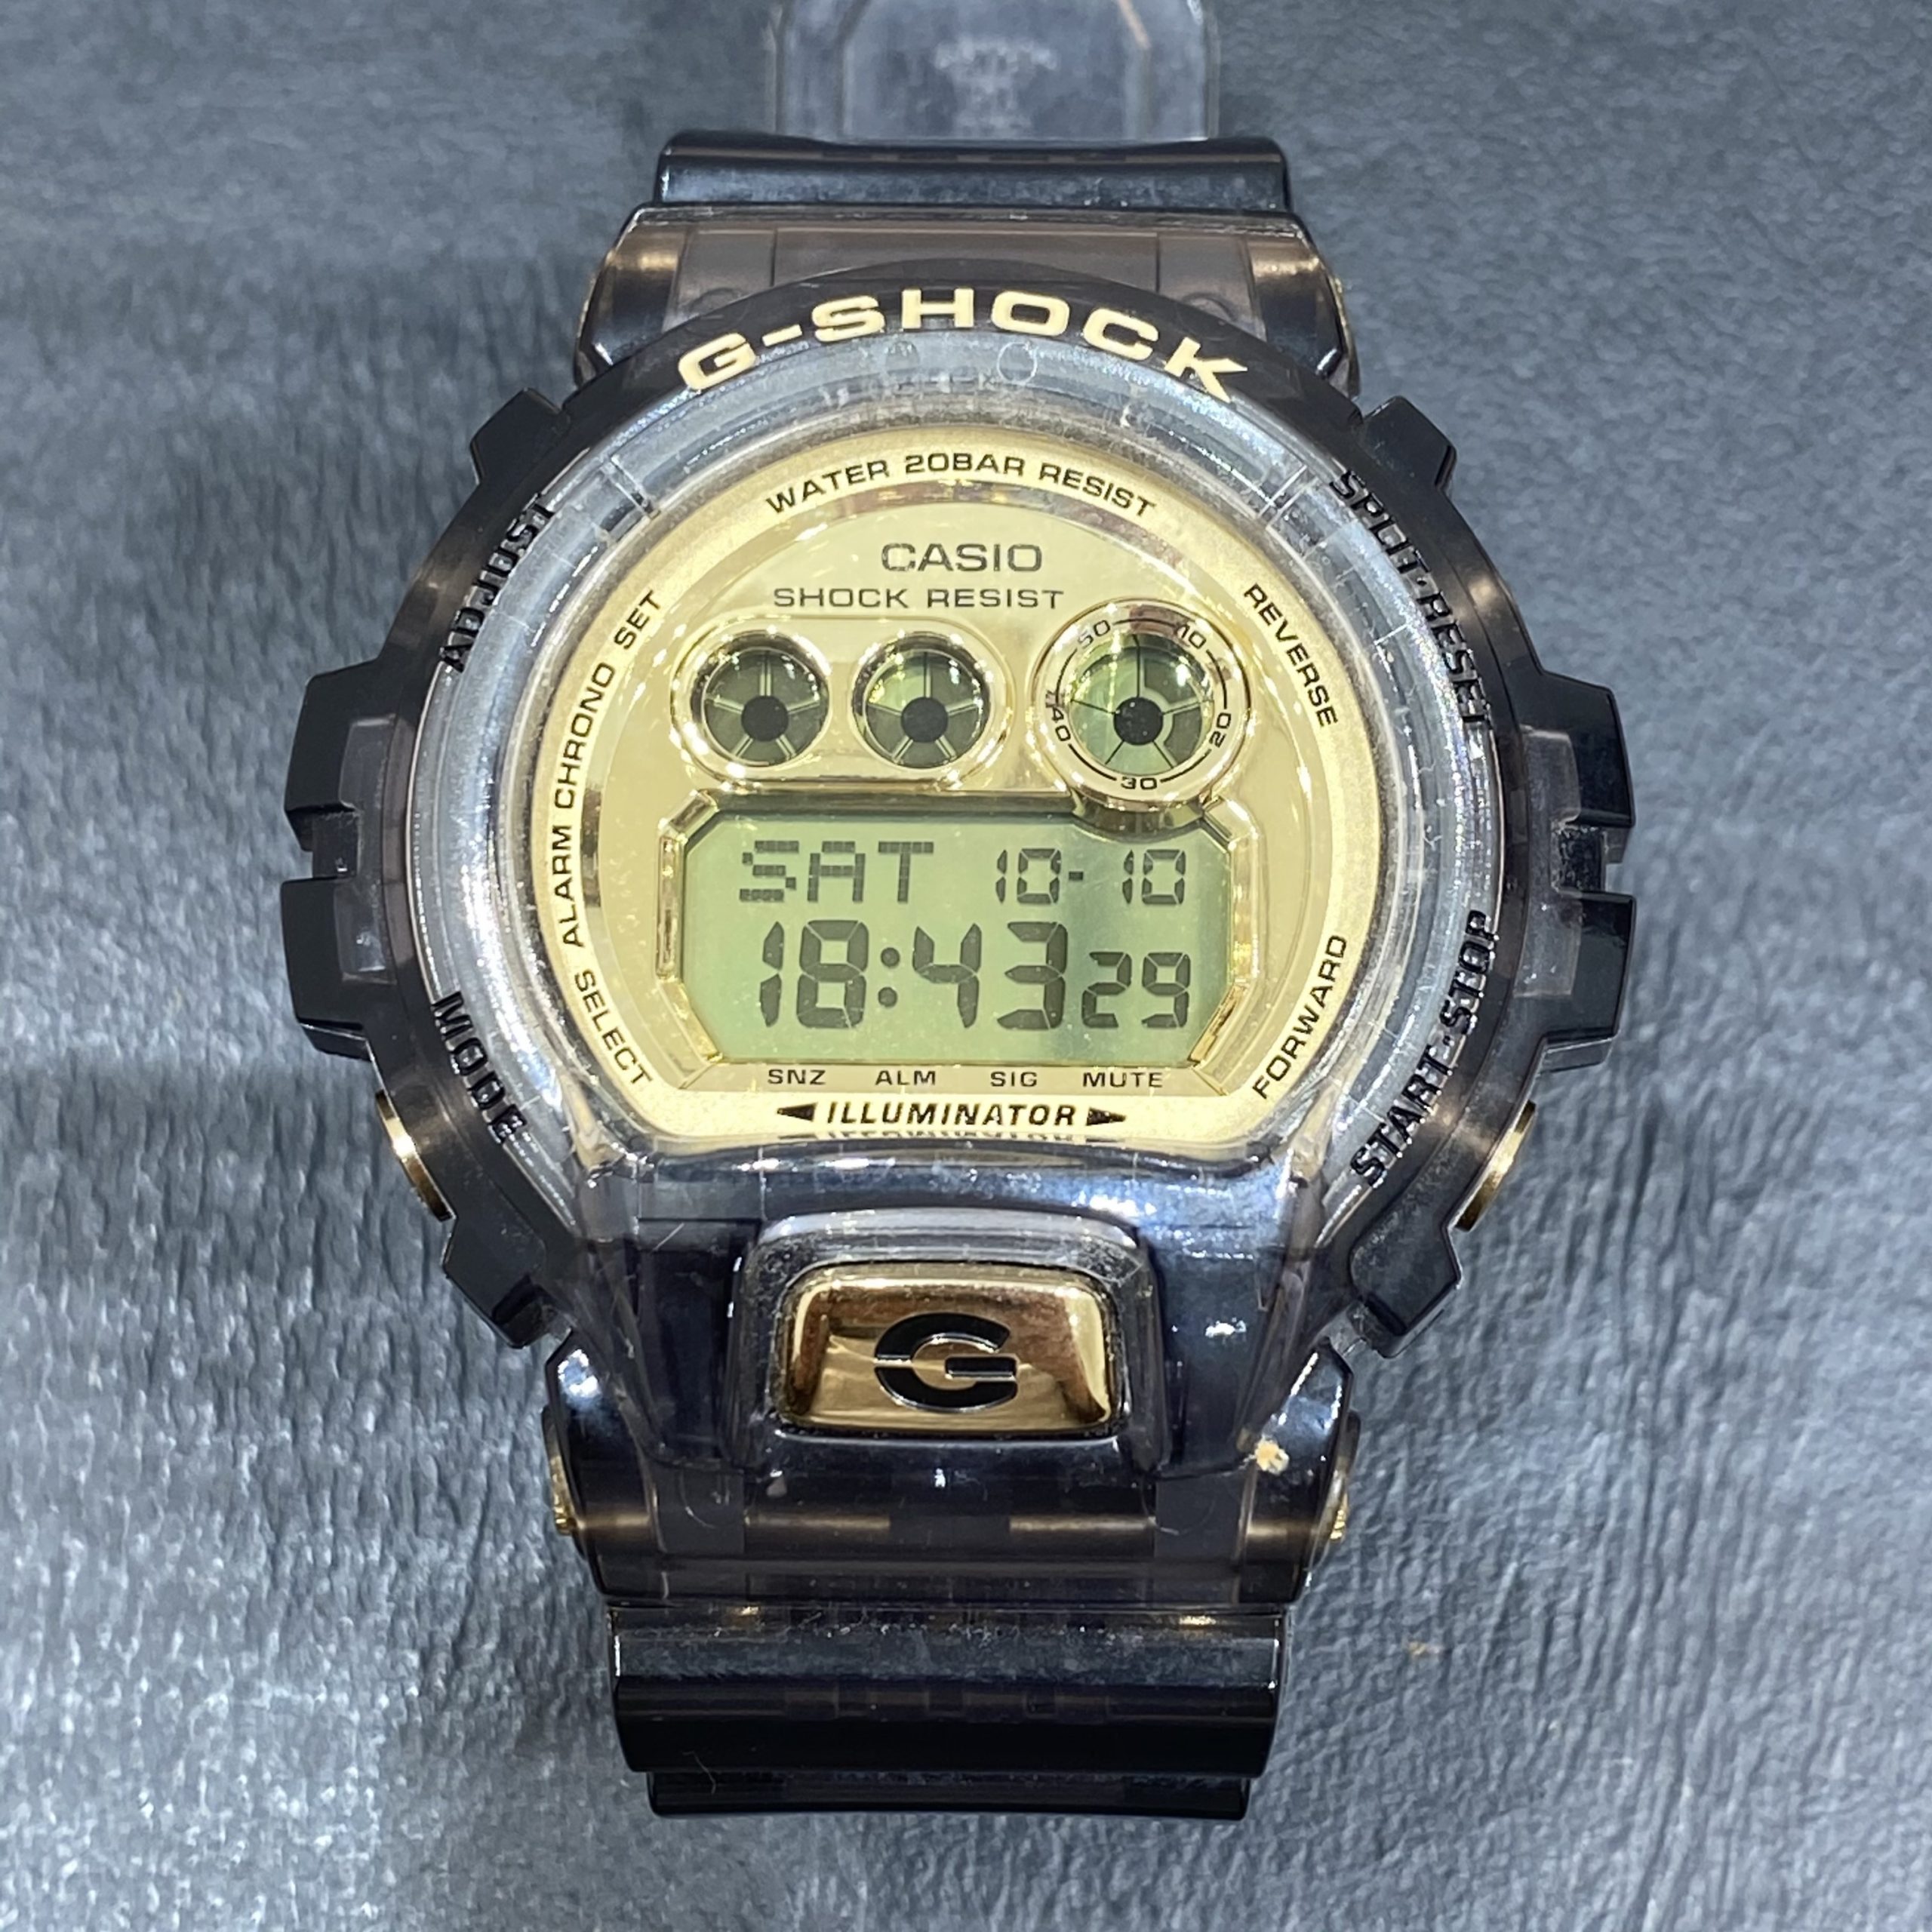 【CASIO/カシオ】G-SHOCK/ジーショック RESIST デジタル腕時計 GD-X6900FB 3420 ゴールド×グレースケルトン 